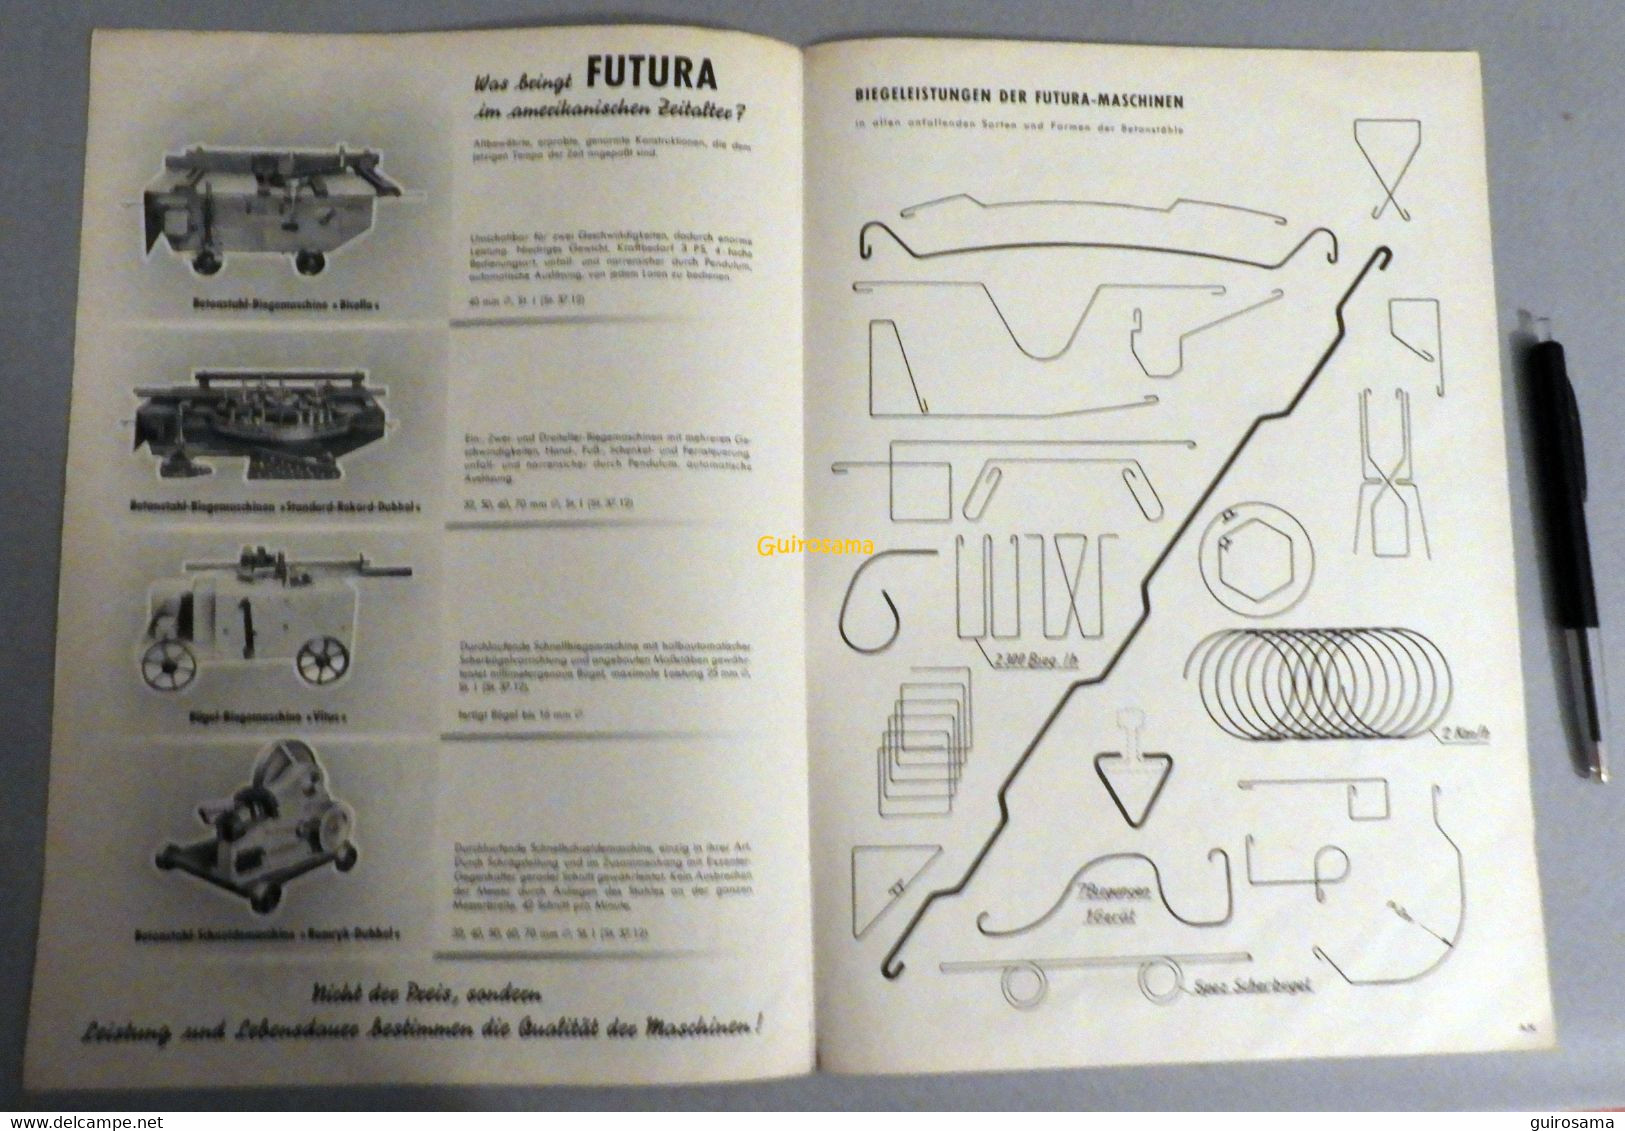 Futura Maschinen - Dess Ed. Freutel - 1954 - Automobil